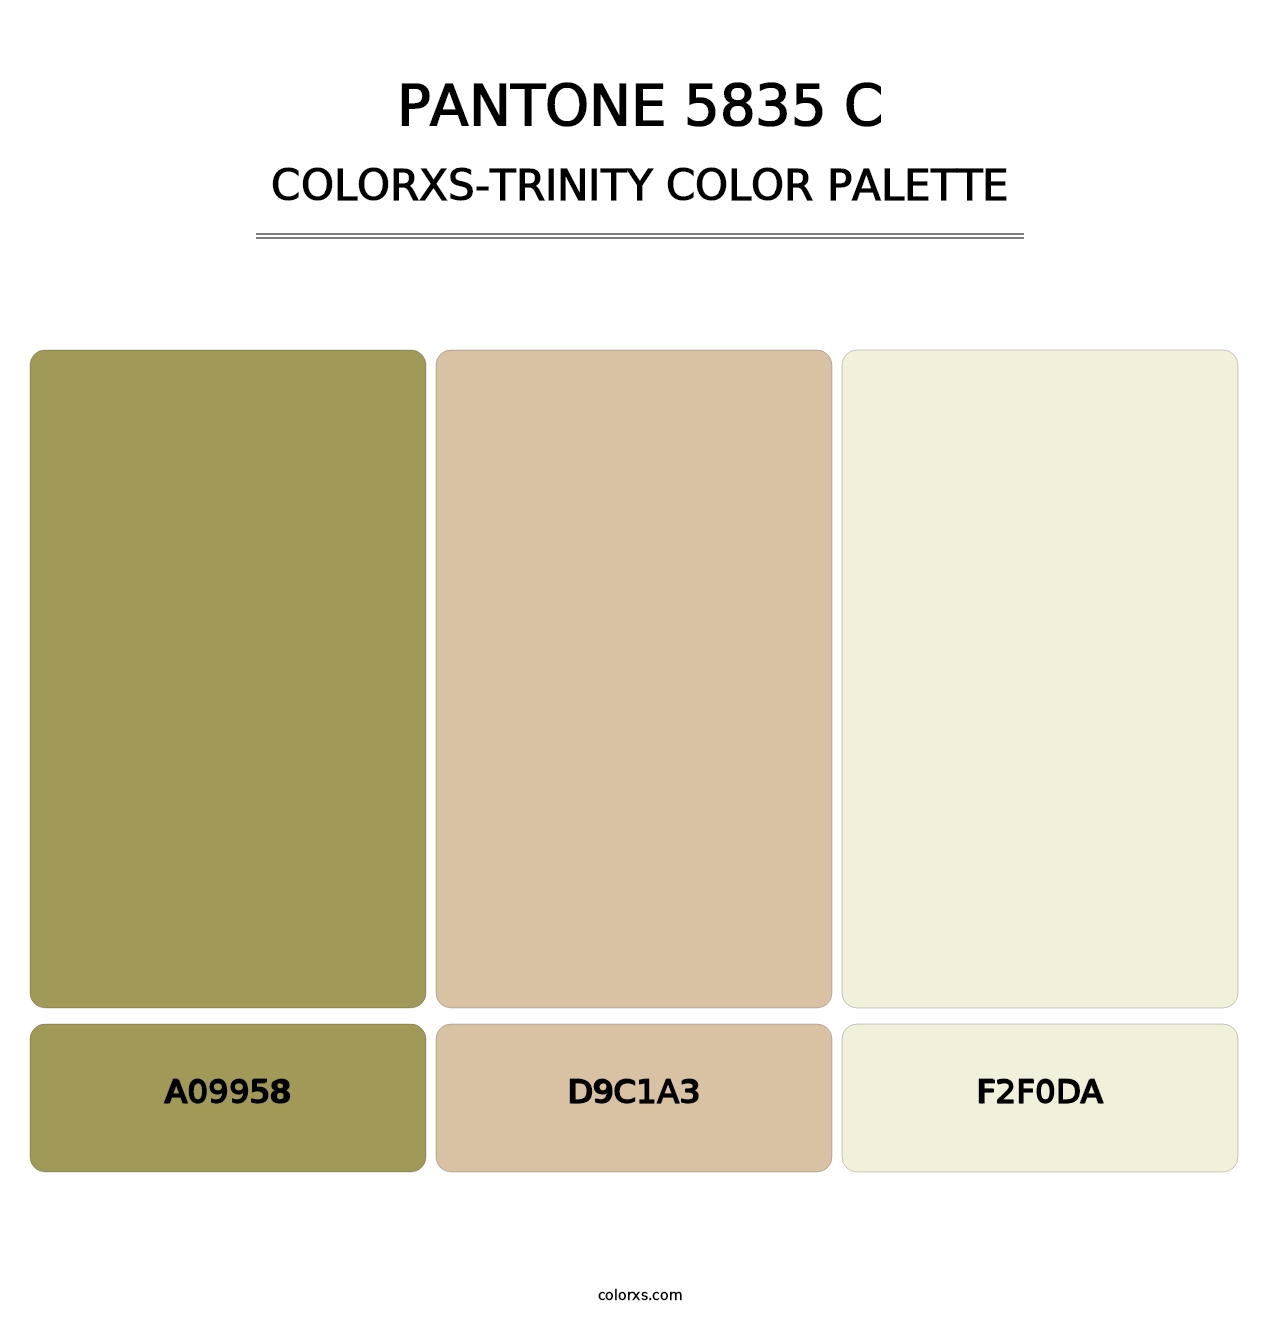 PANTONE 5835 C - Colorxs Trinity Palette